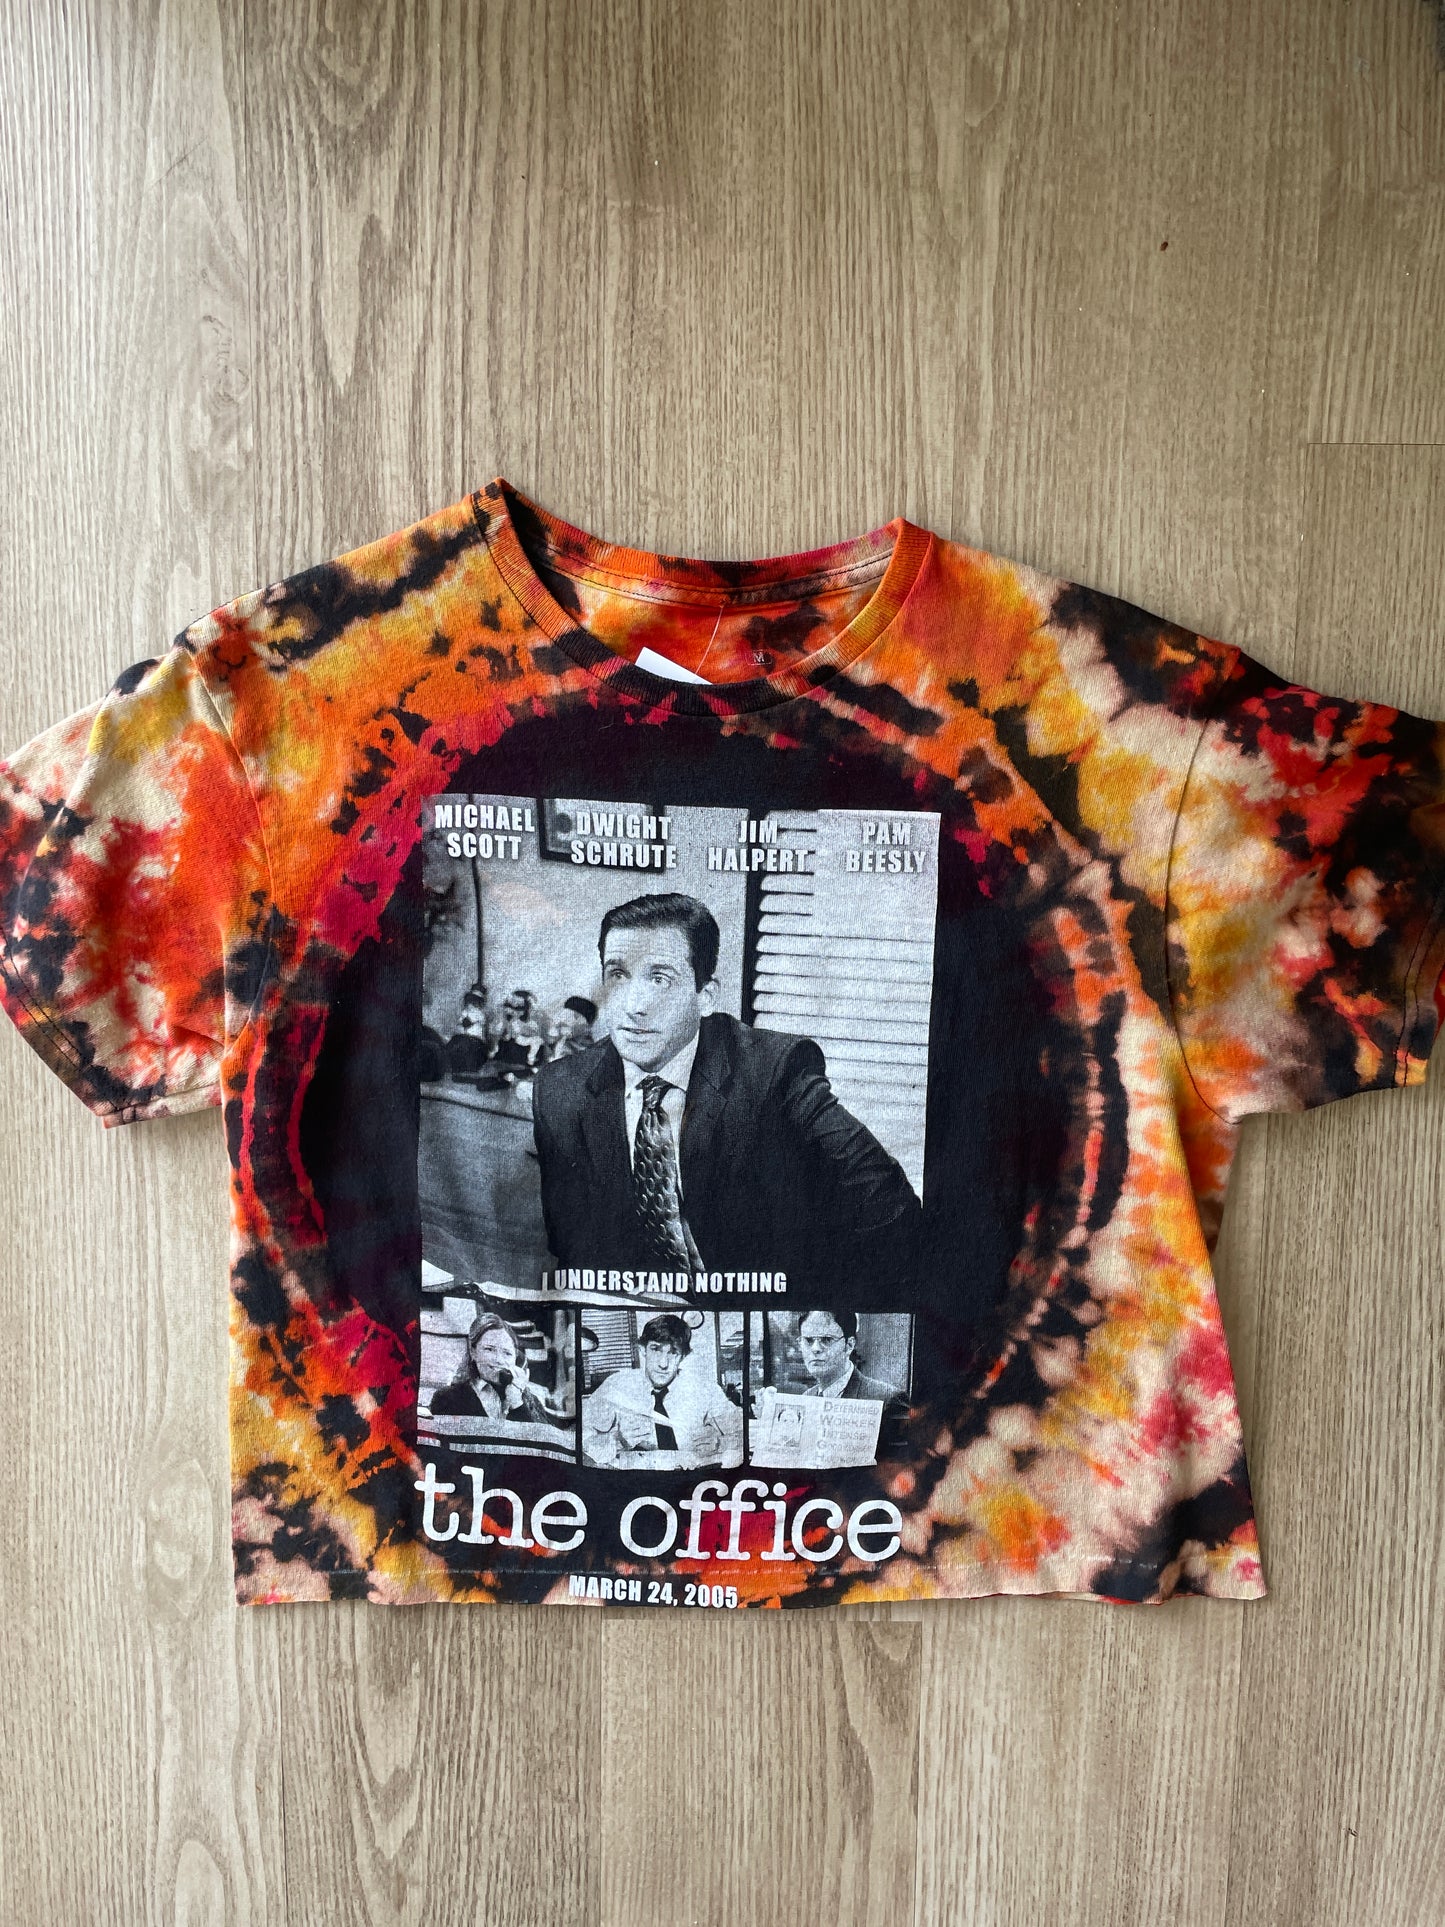 Medium Men’s First Episode of The Office Handmade Tie Dye T-Shirt | Black, Red, and Orange Tie Dye Short Sleeve